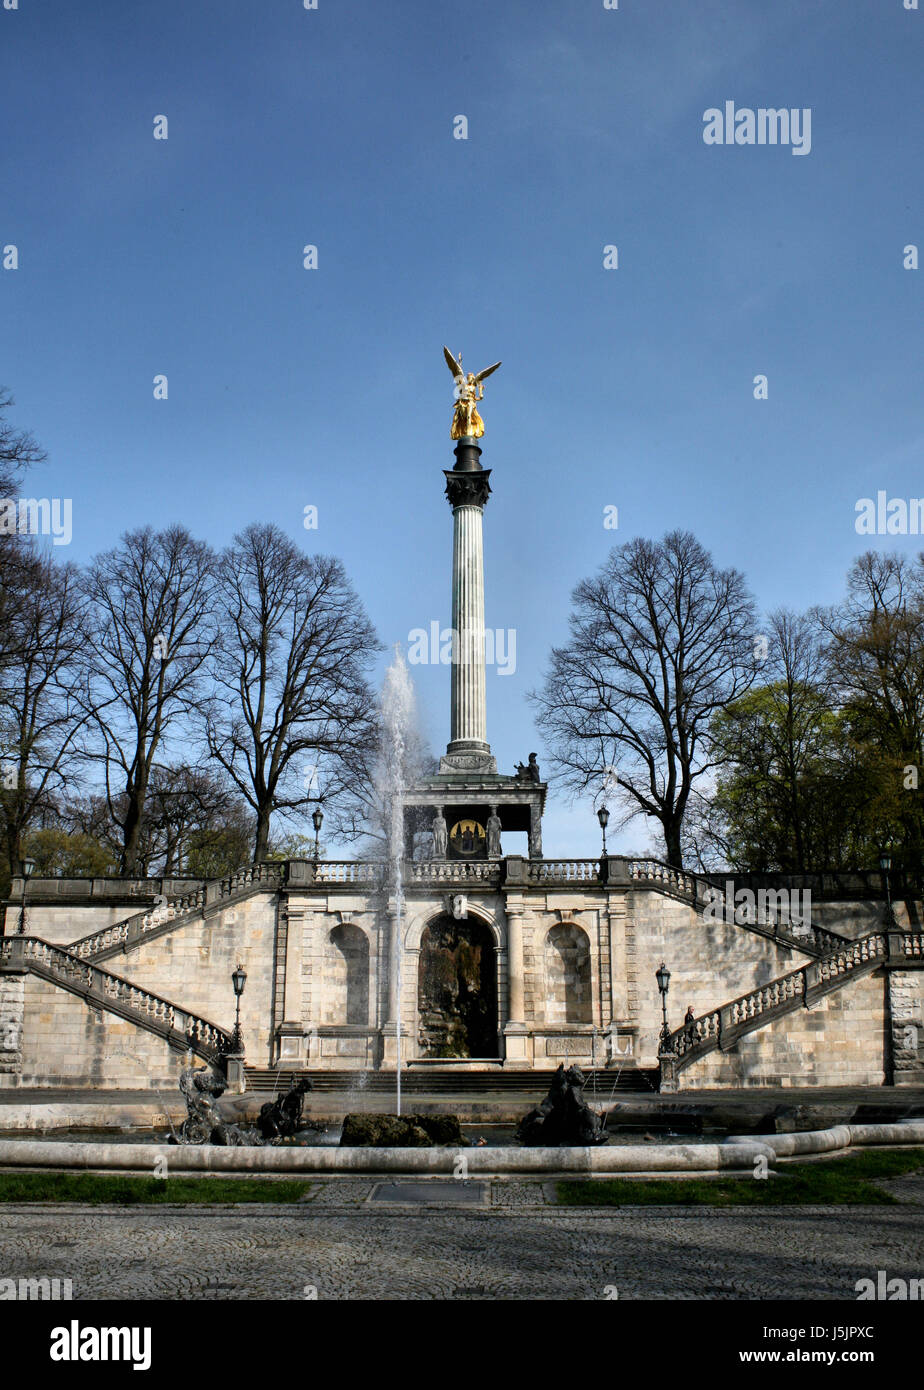 Treppen-Denkmal Säule Engel Engel München Brunnen gold friedensengel Stockfoto